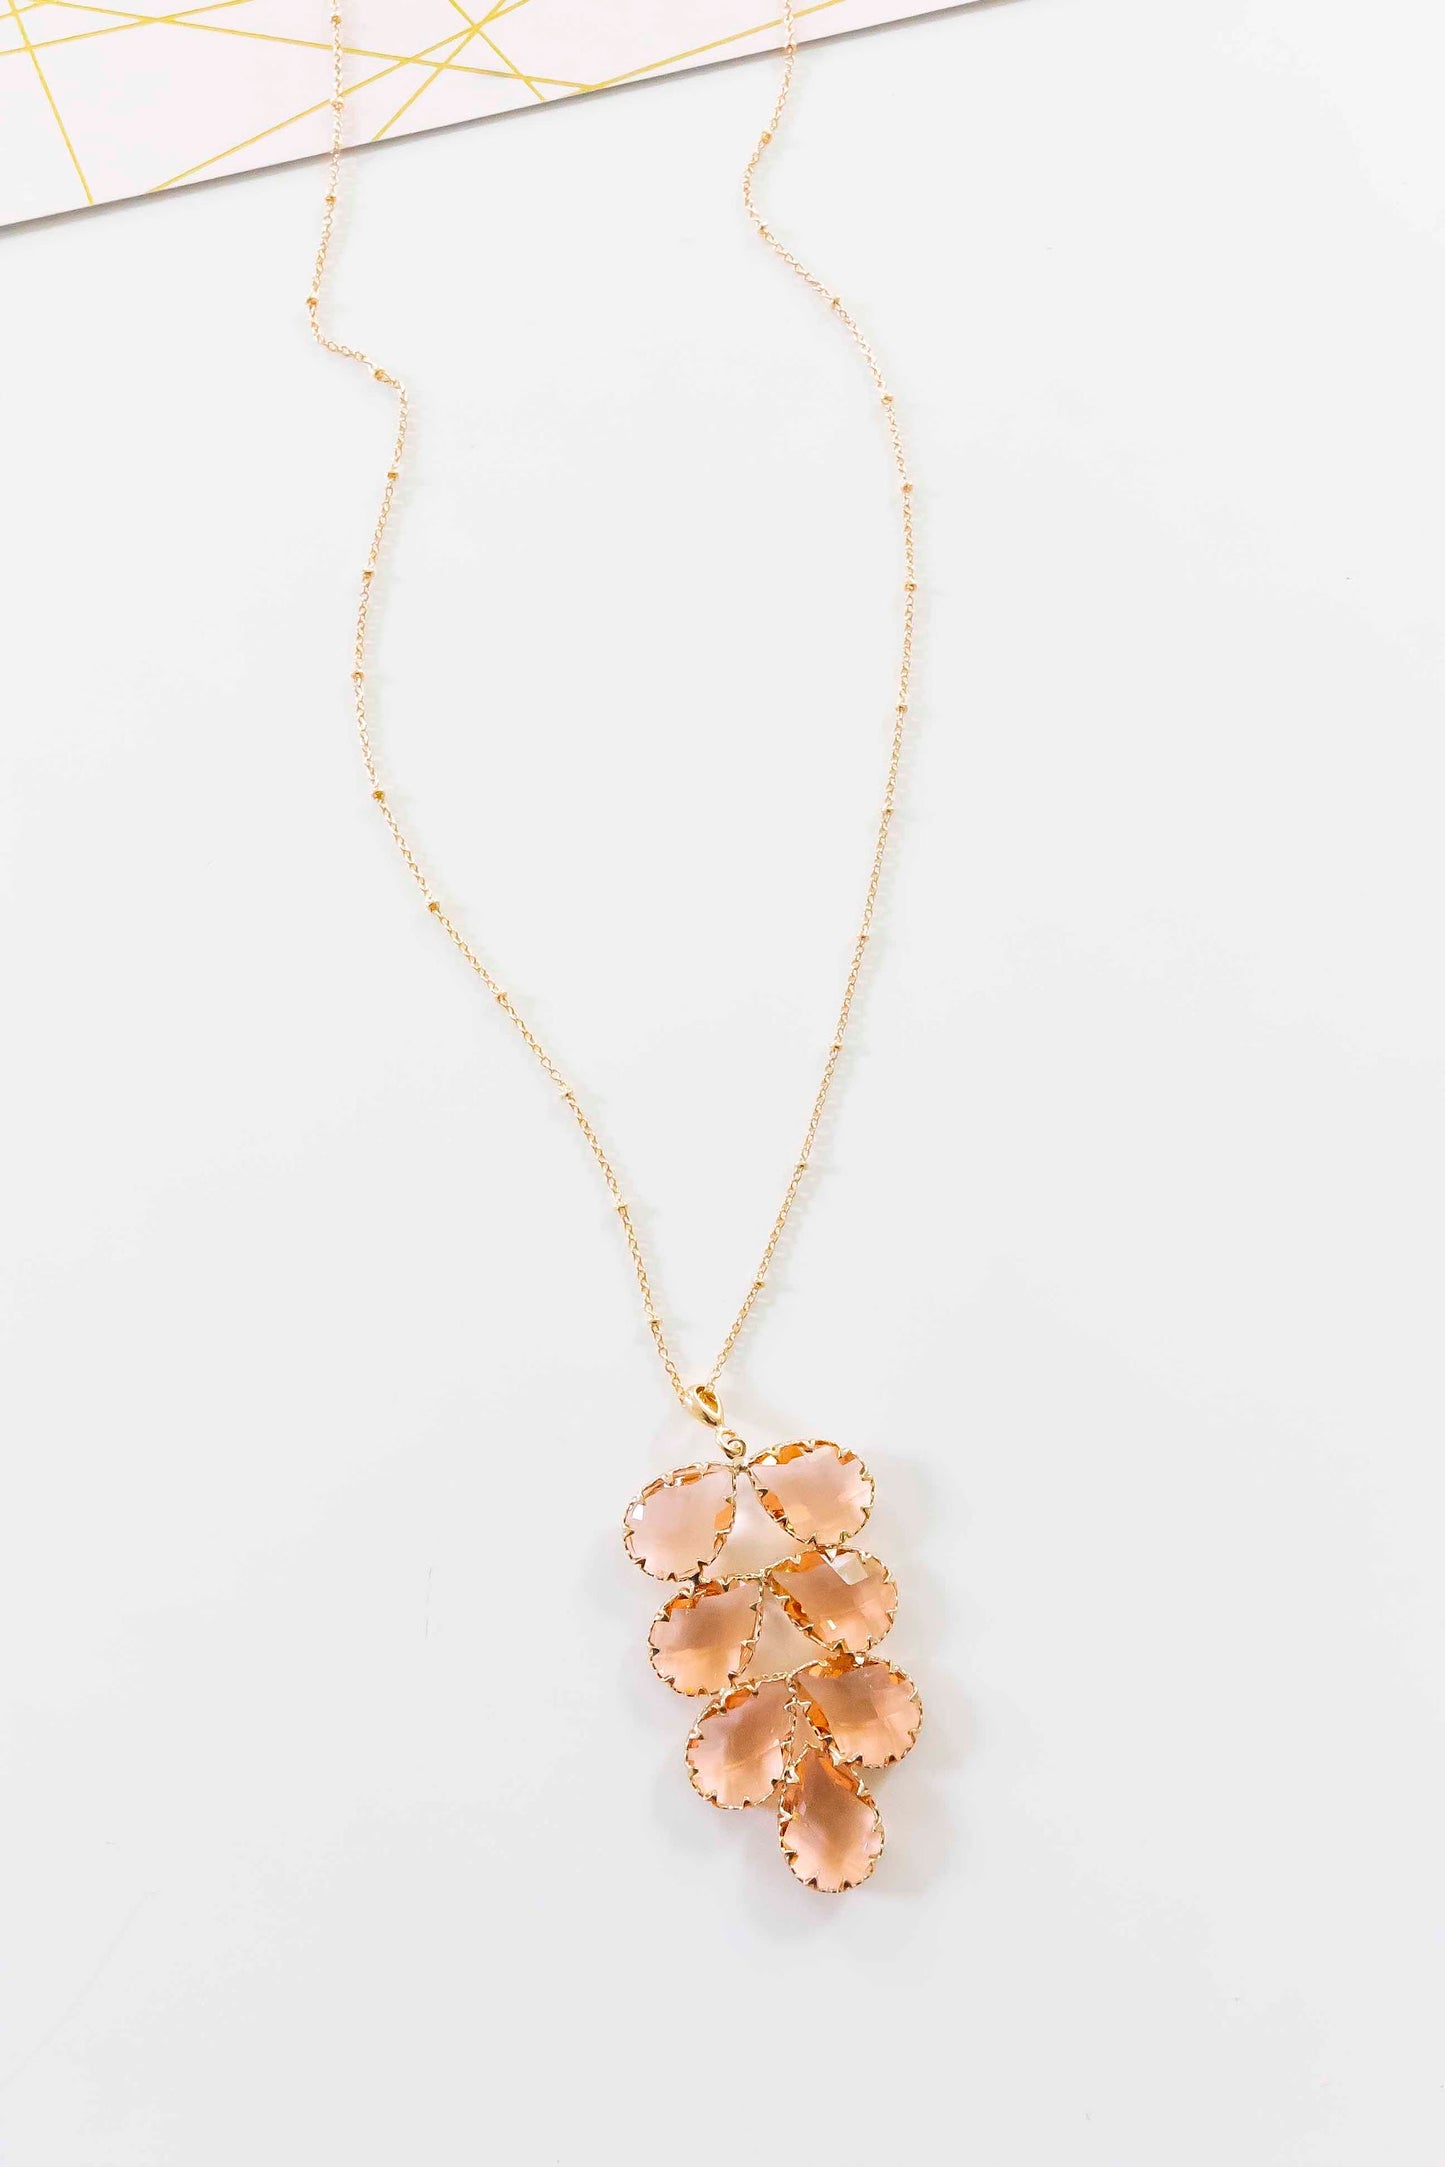 Zaney Blush Crystal Necklace | Long Pink Gemstone Necklace | Teardrop Crystal Fern Pendant | Romantic Feminine Accessories